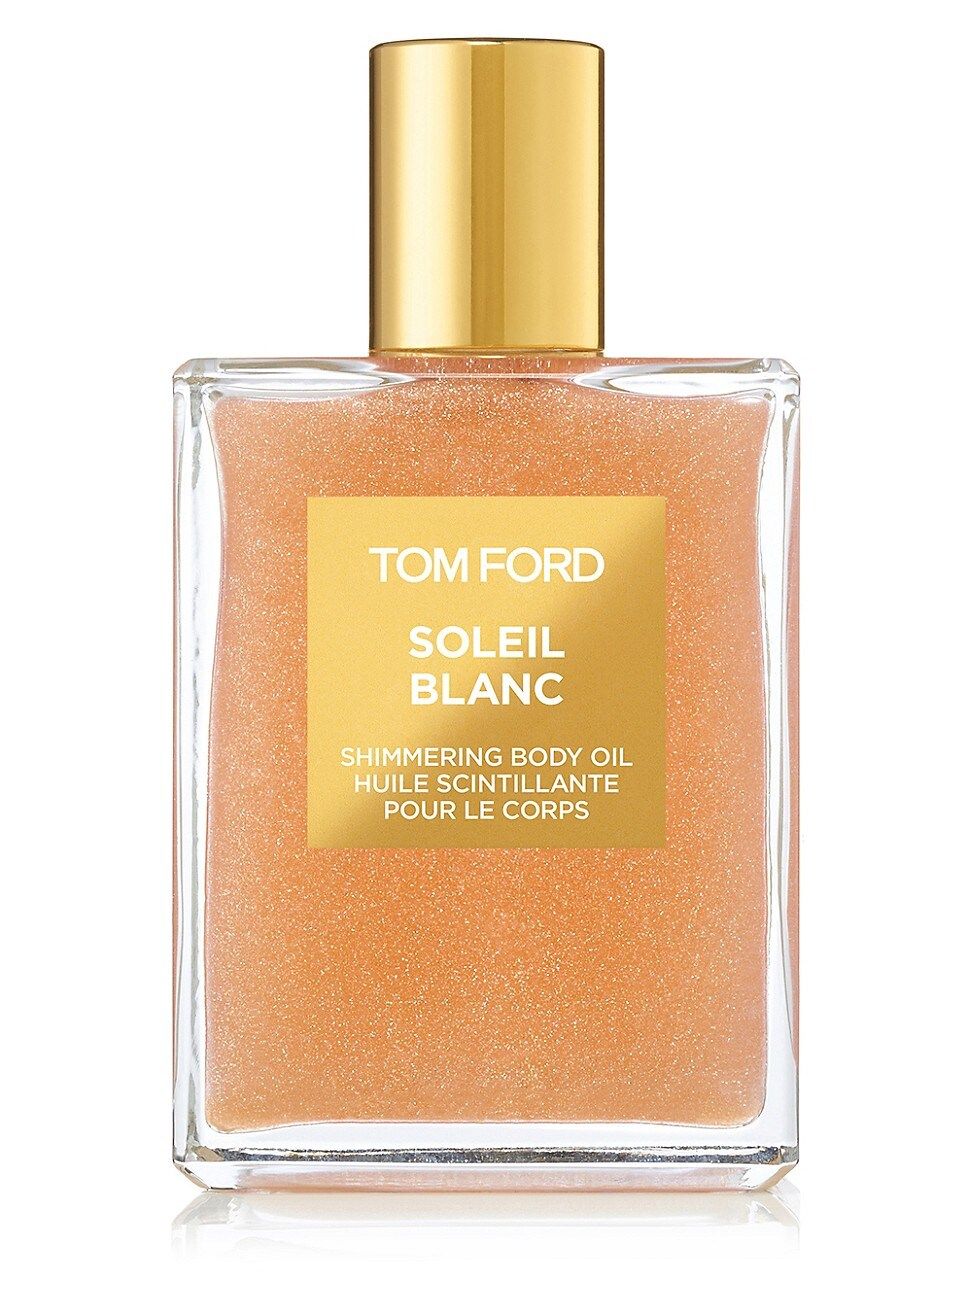 Tom Ford Soleil Blanc Shimmering Body Oil | Saks Fifth Avenue